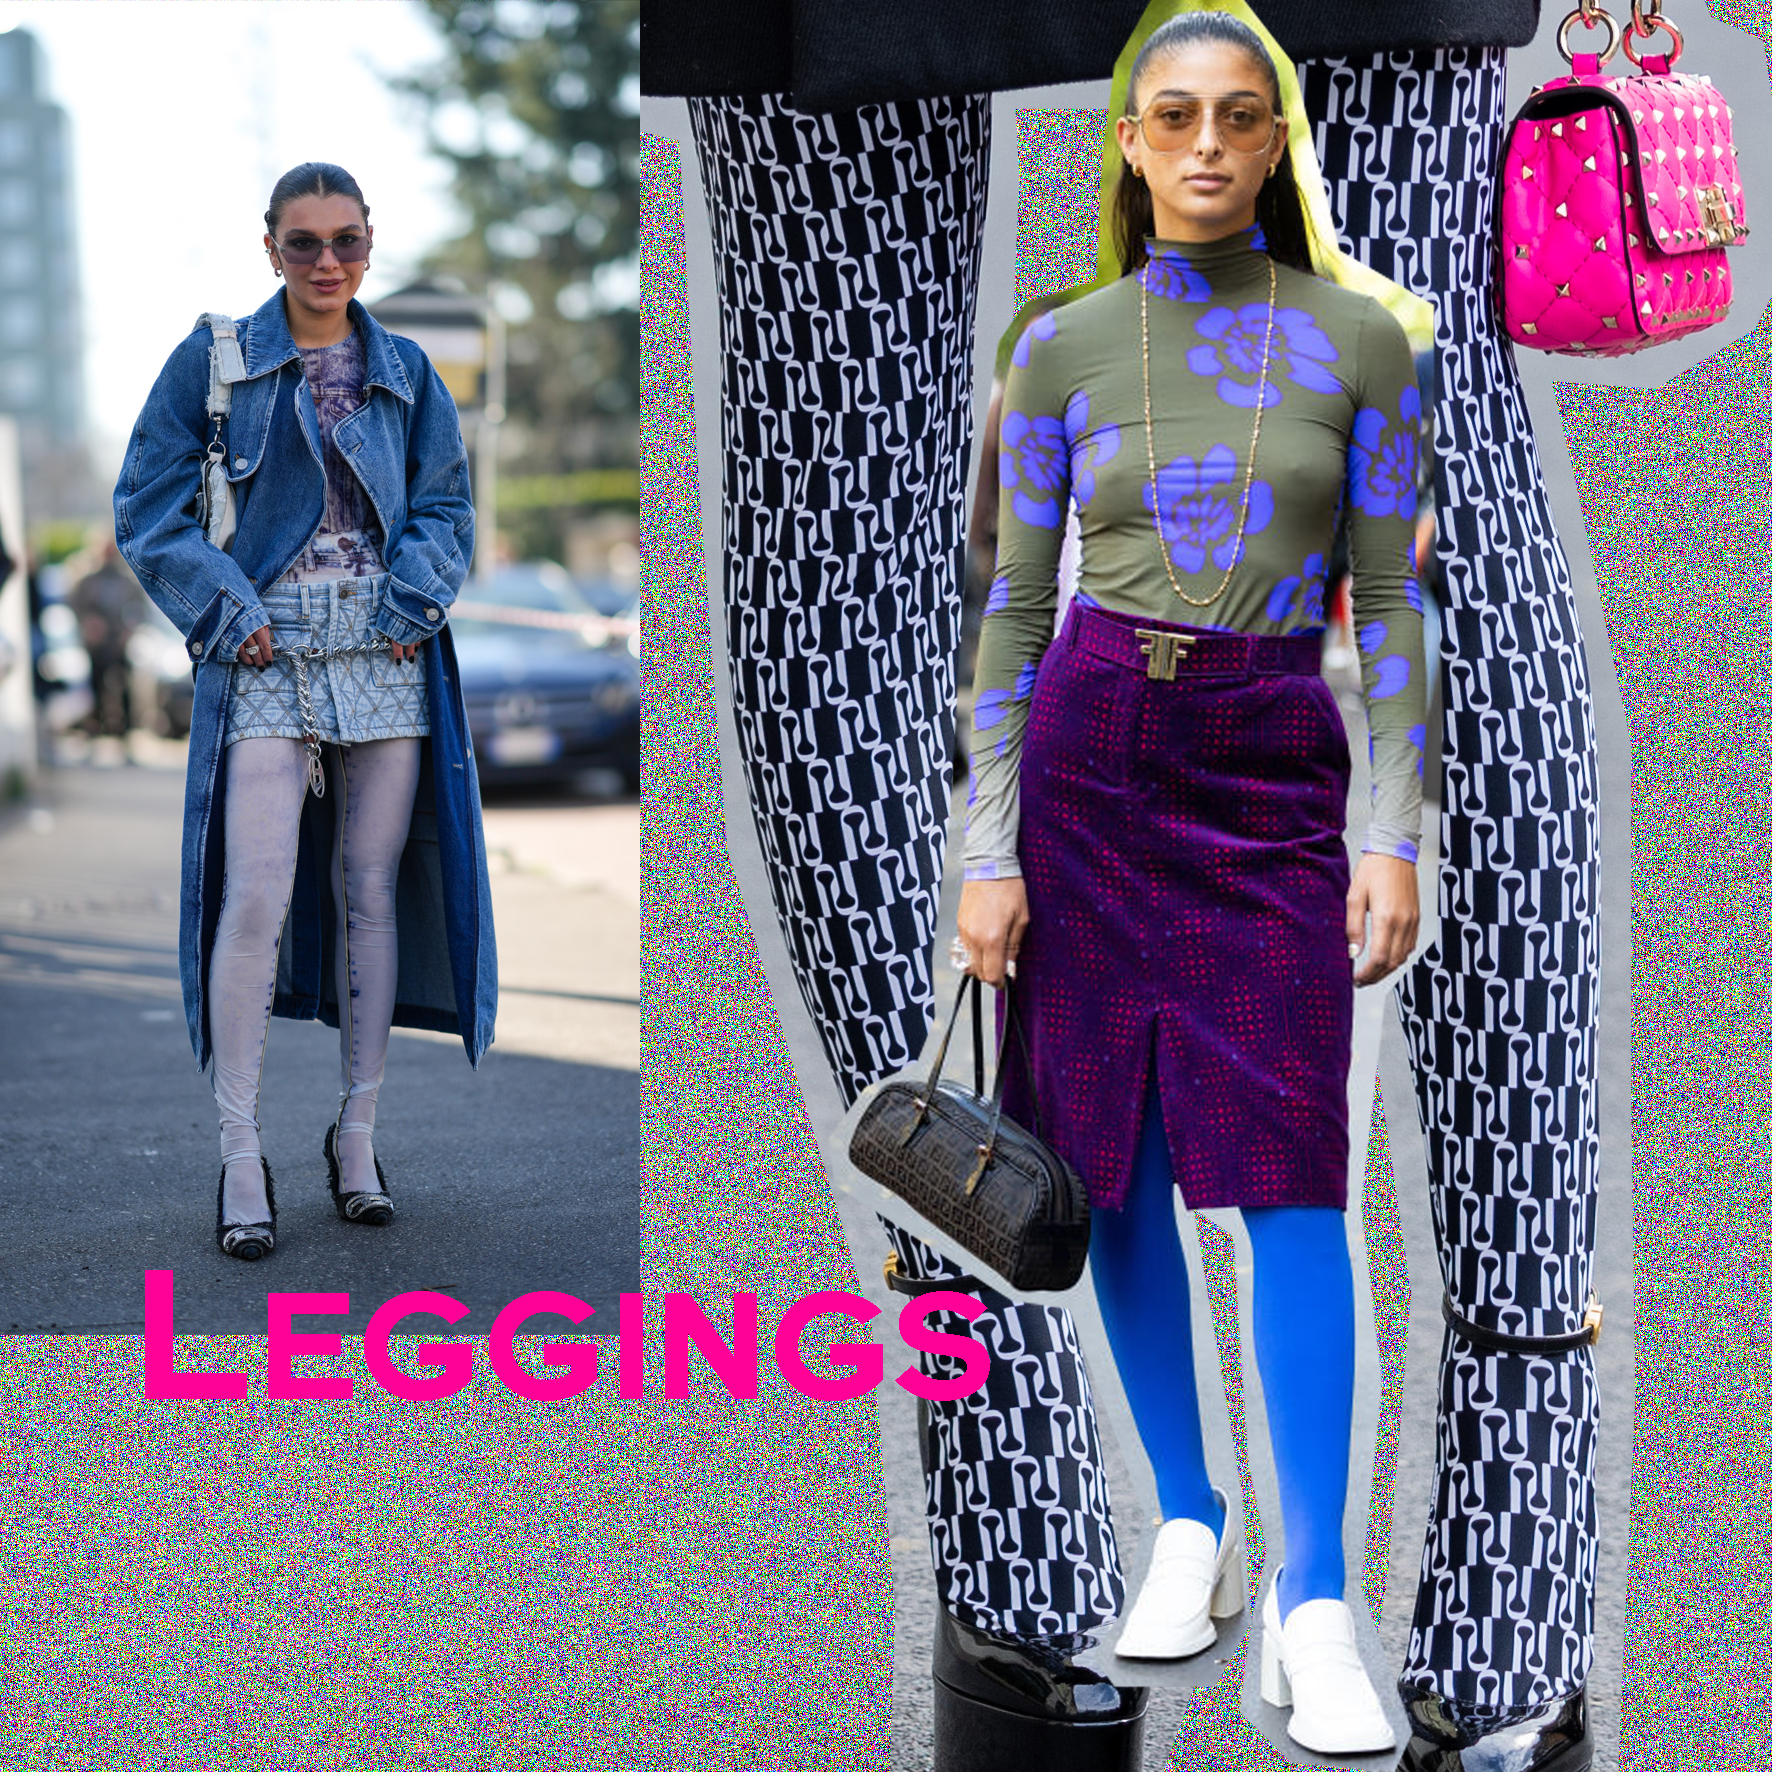 Leggings: Πως θα φορέσεις το αγαπημένο σου item όπως οι fashion experts